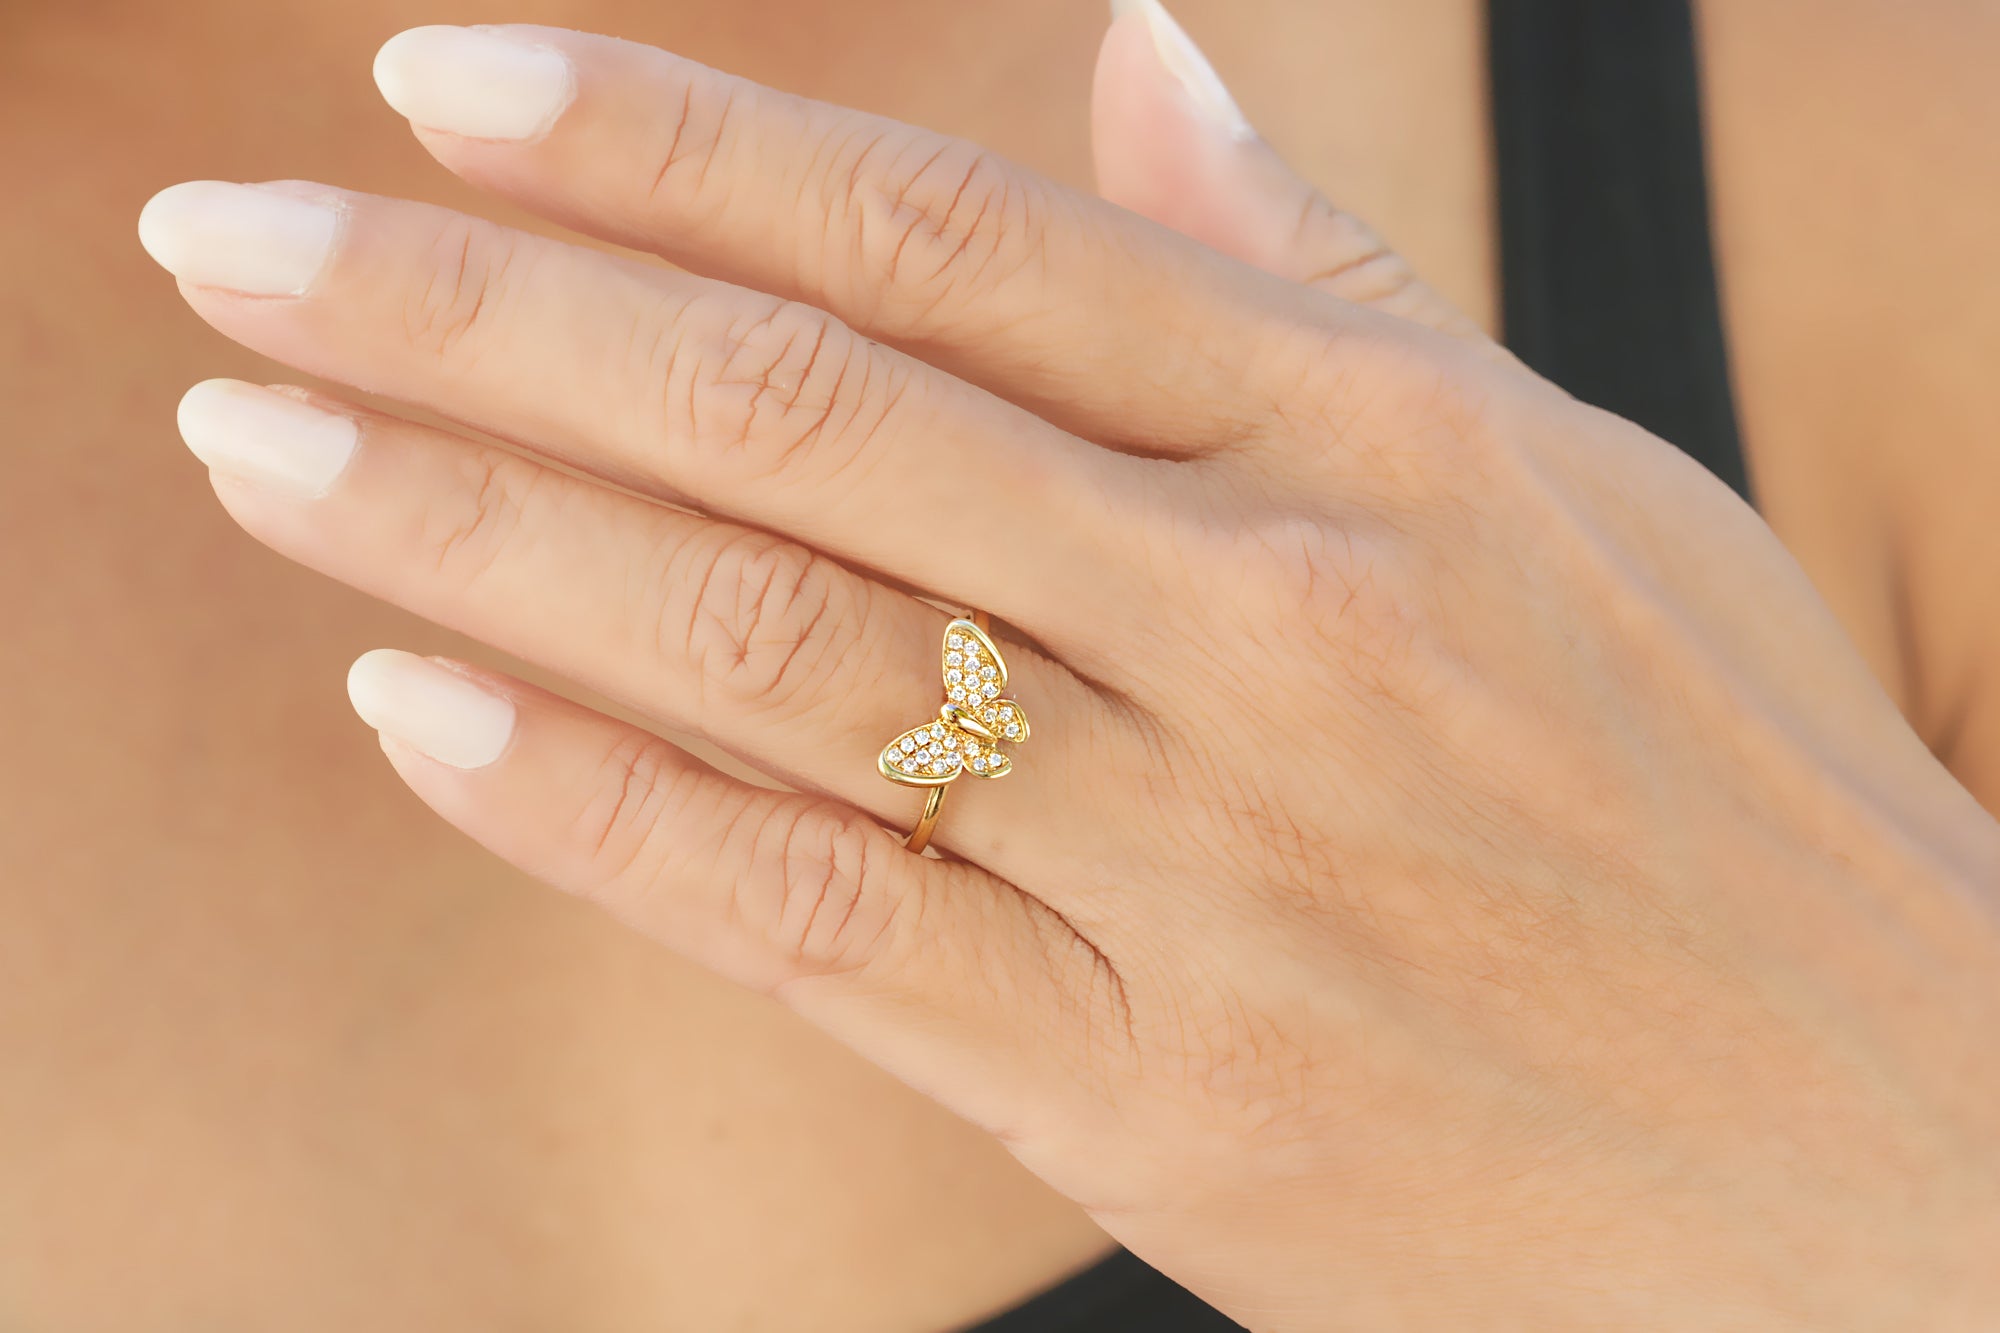 The Petite Pavé Diamond Butterfly Ring